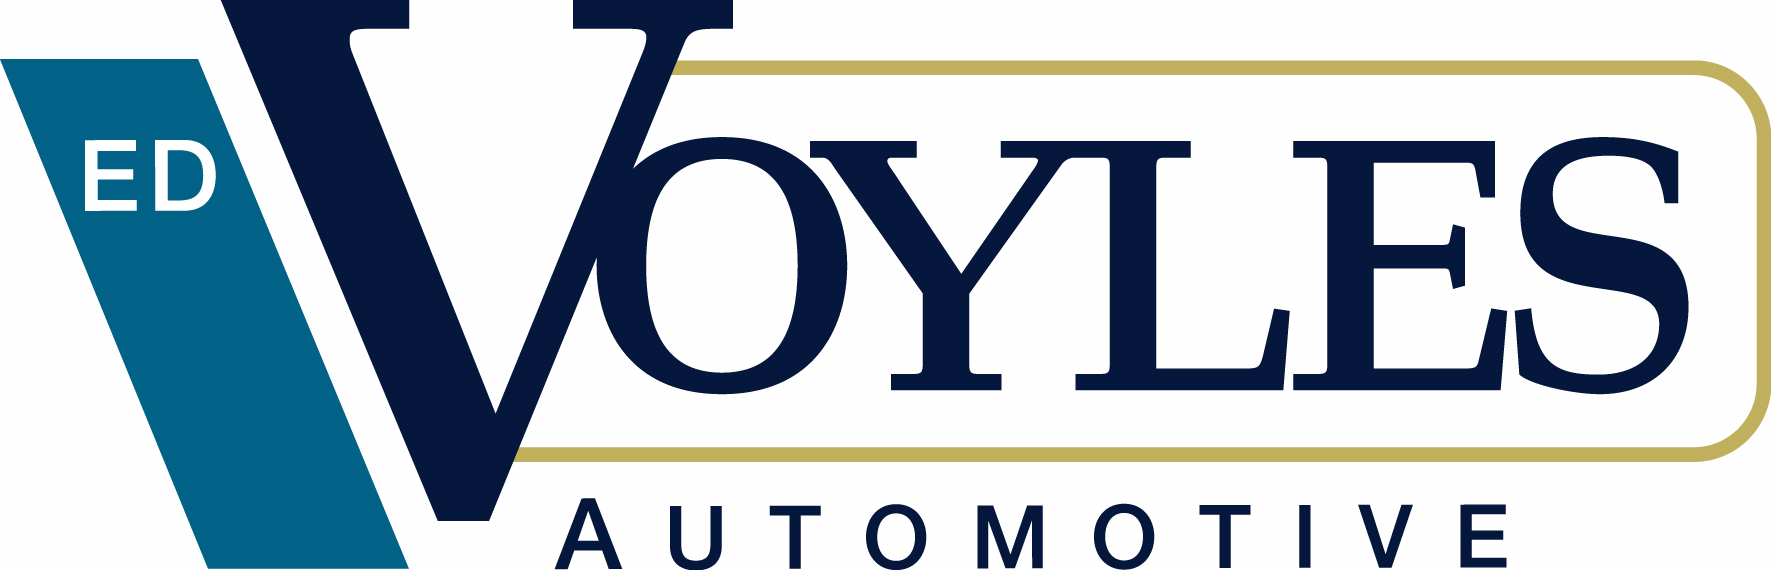 Ed Voyles Automotive Group